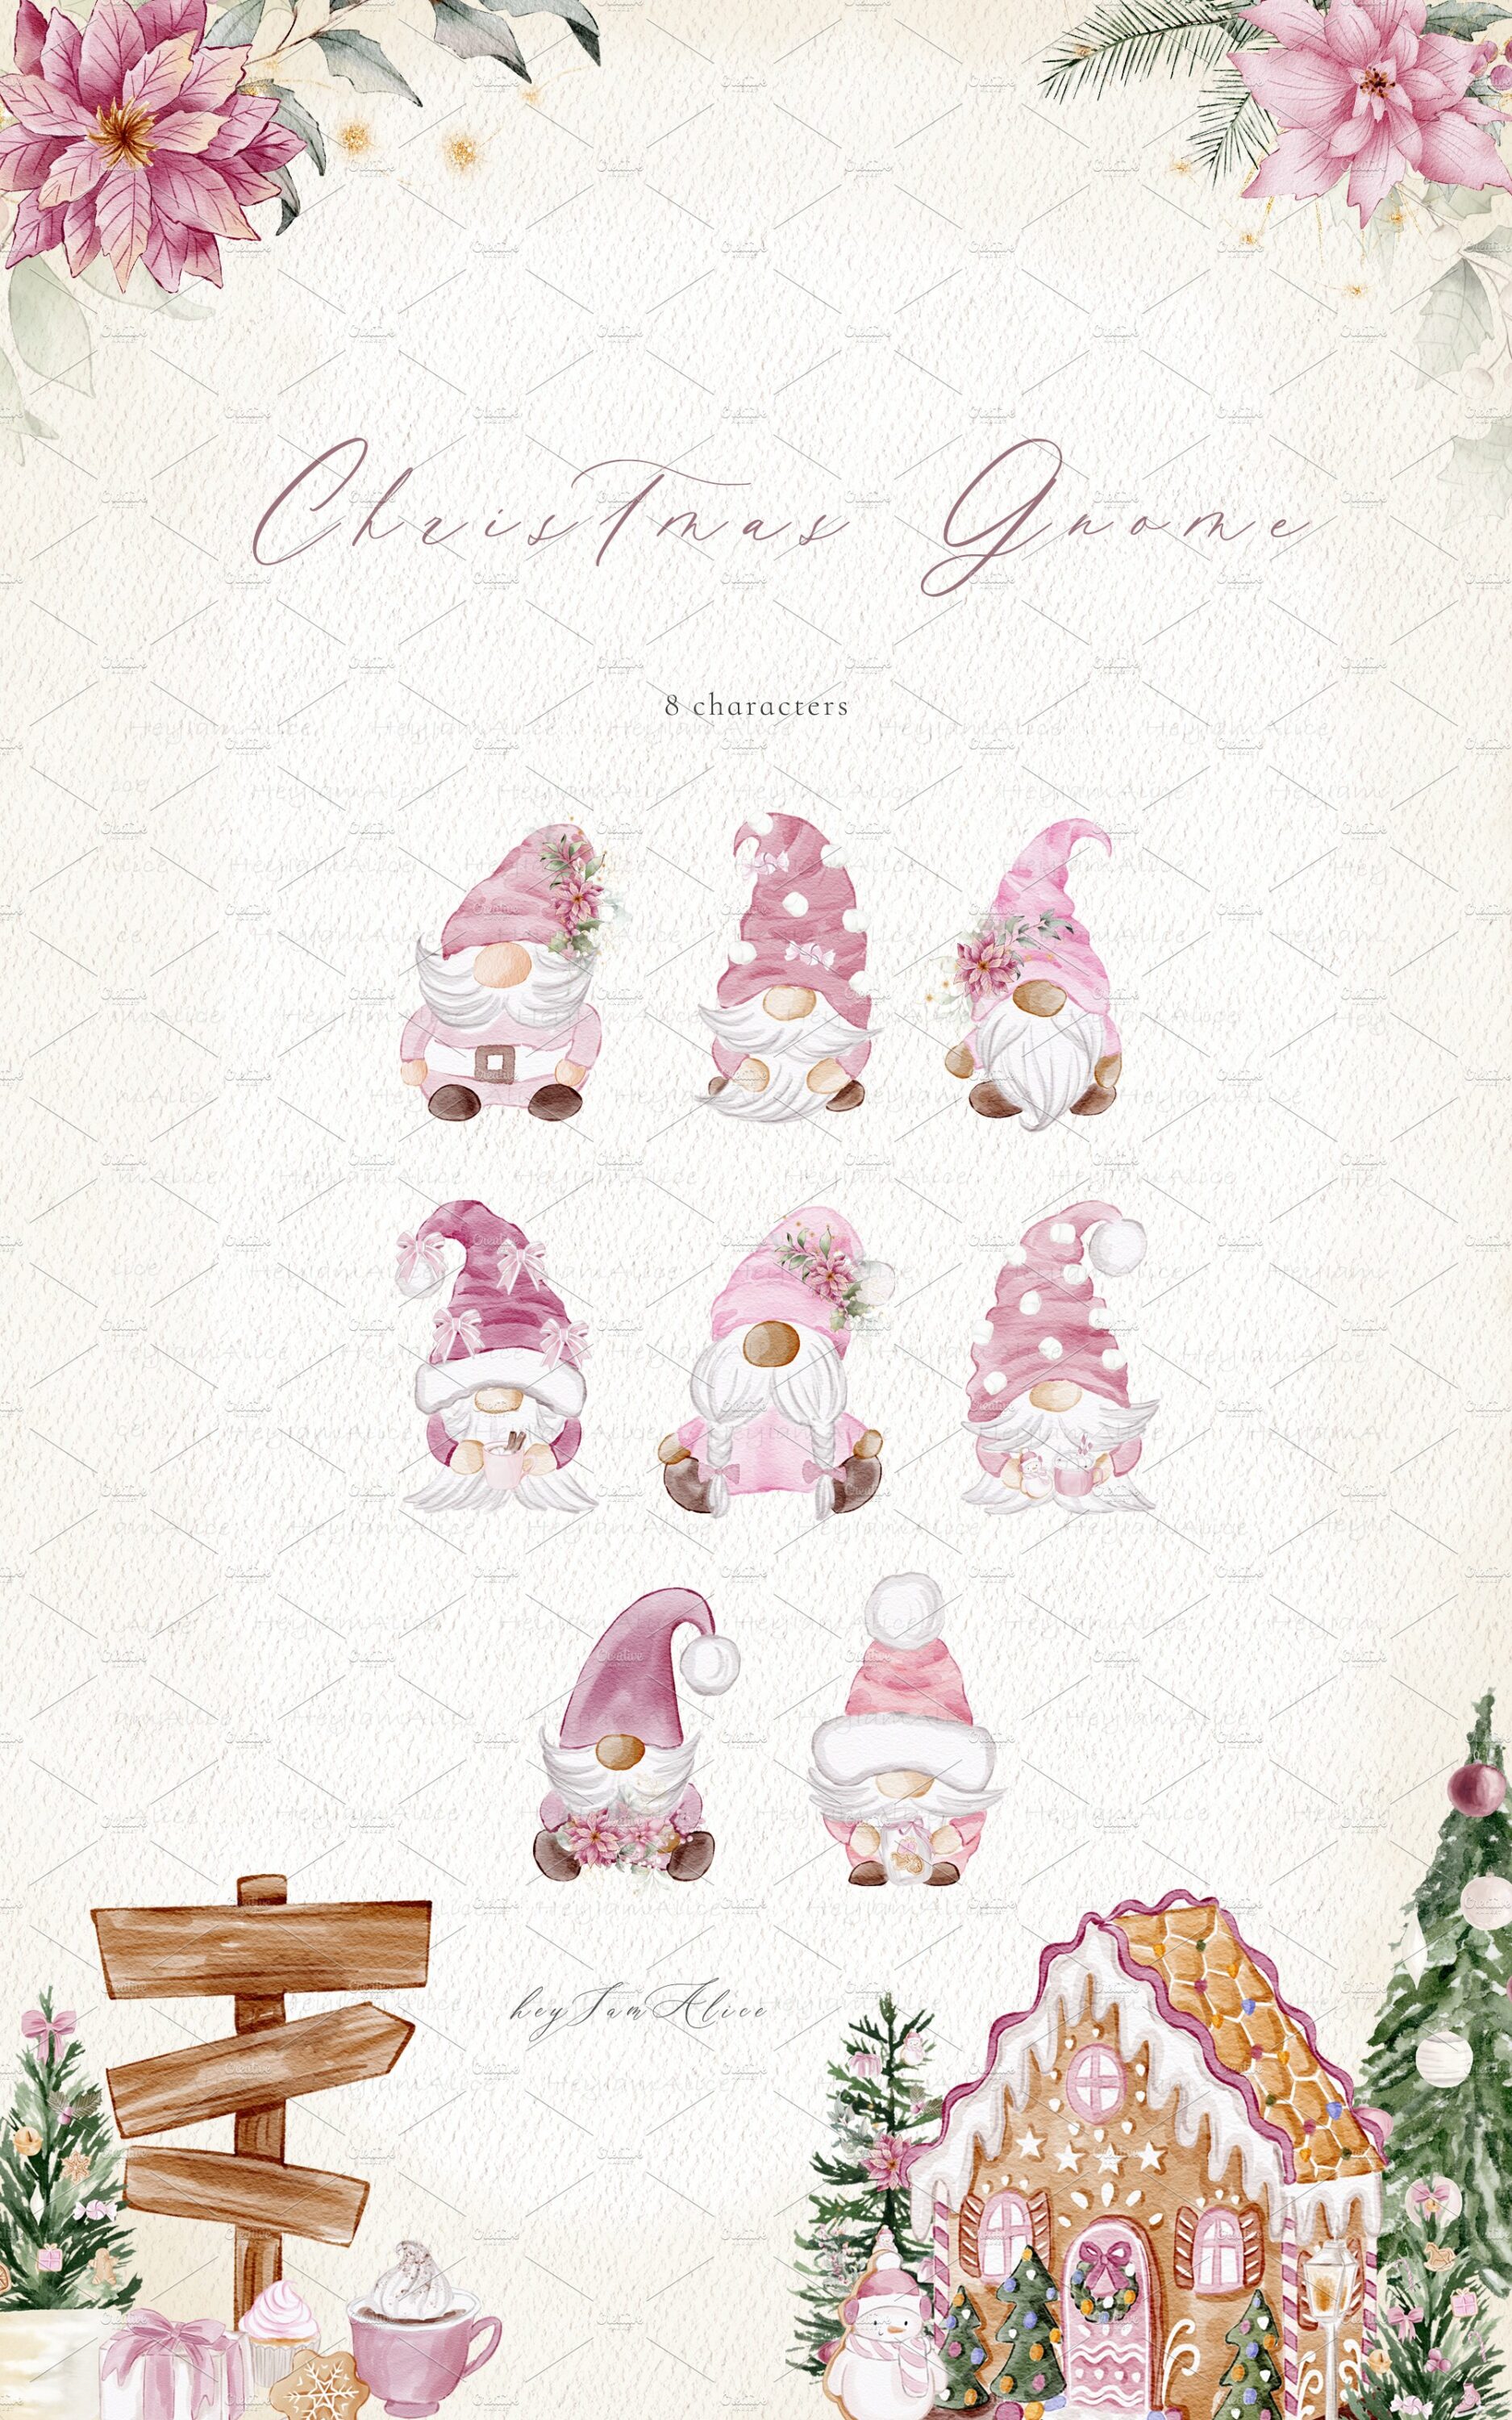 So cute pink gnomes.